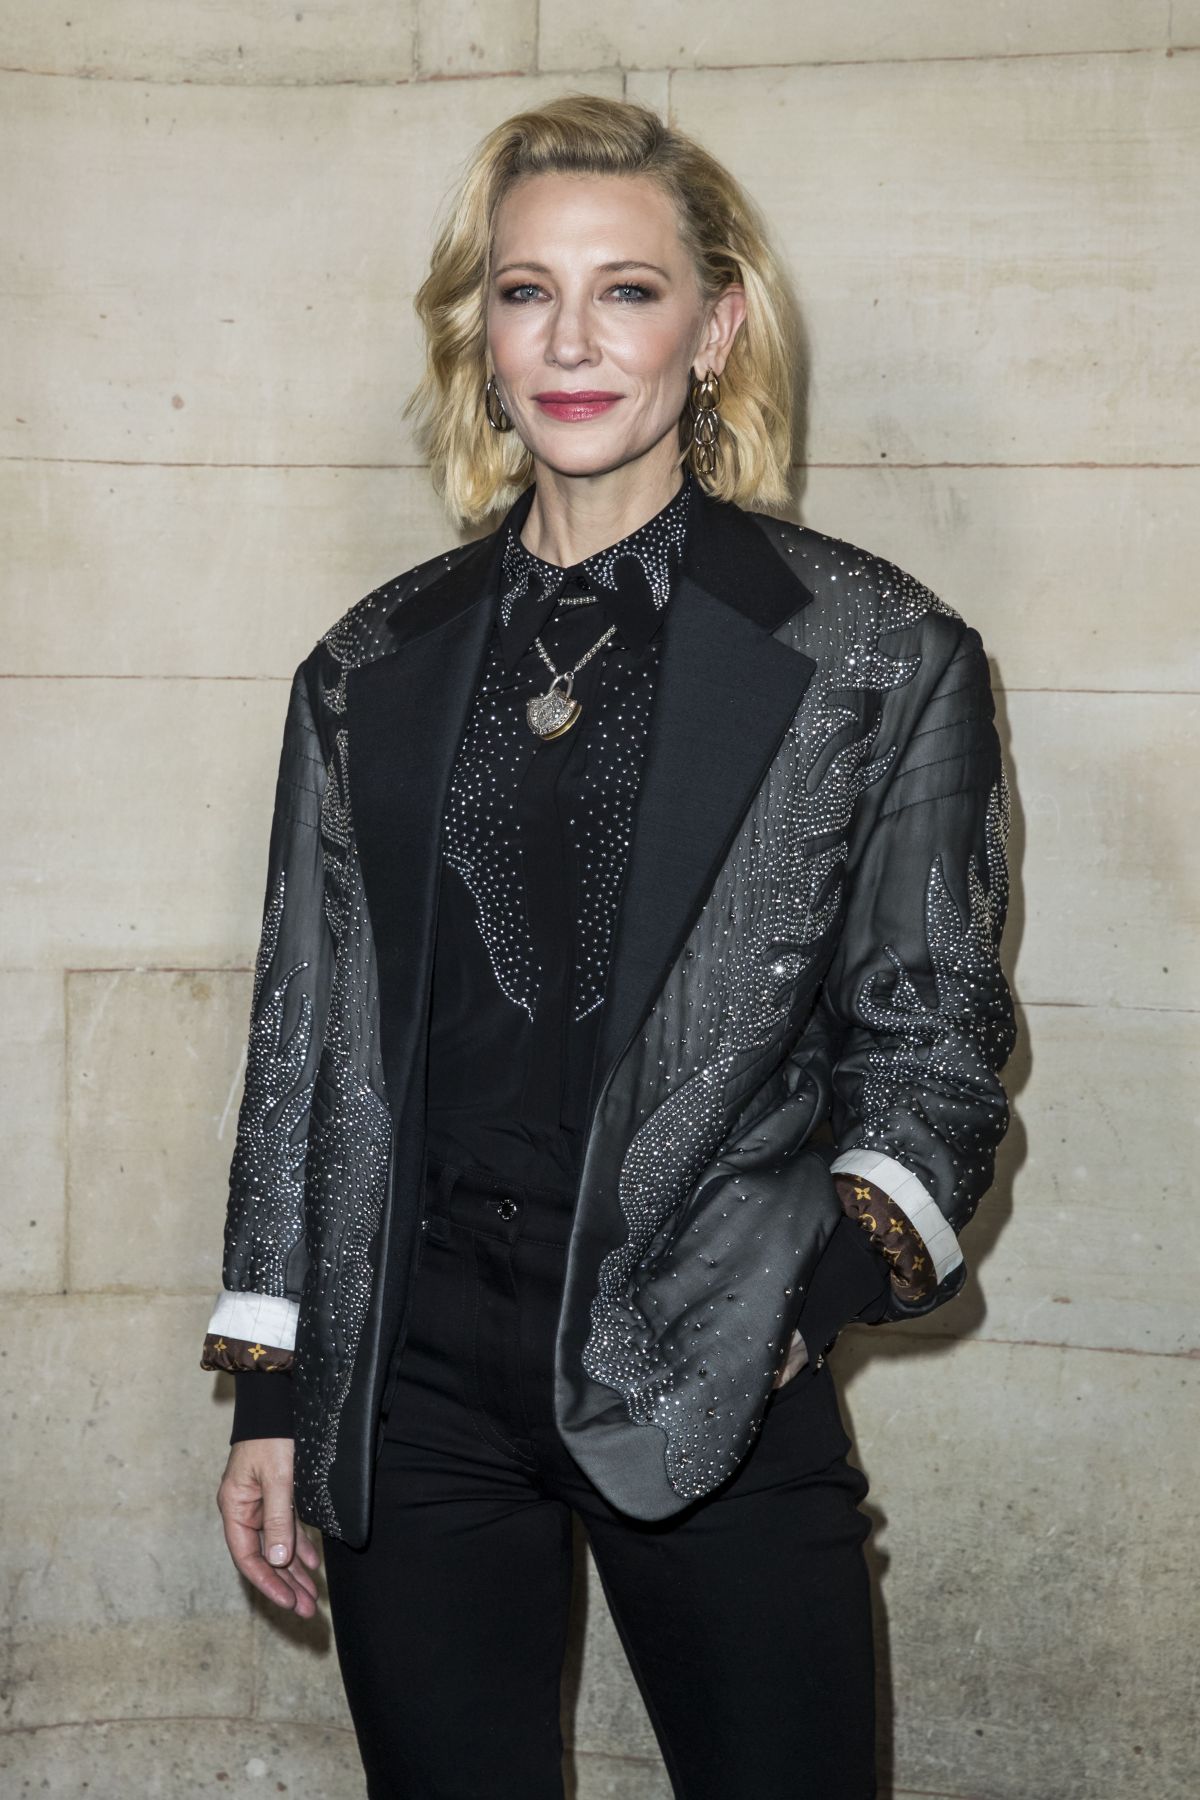 CATE BLANCHETT at Louis Vuitton Fashion Show in Paris 10/02/2018 – HawtCelebs